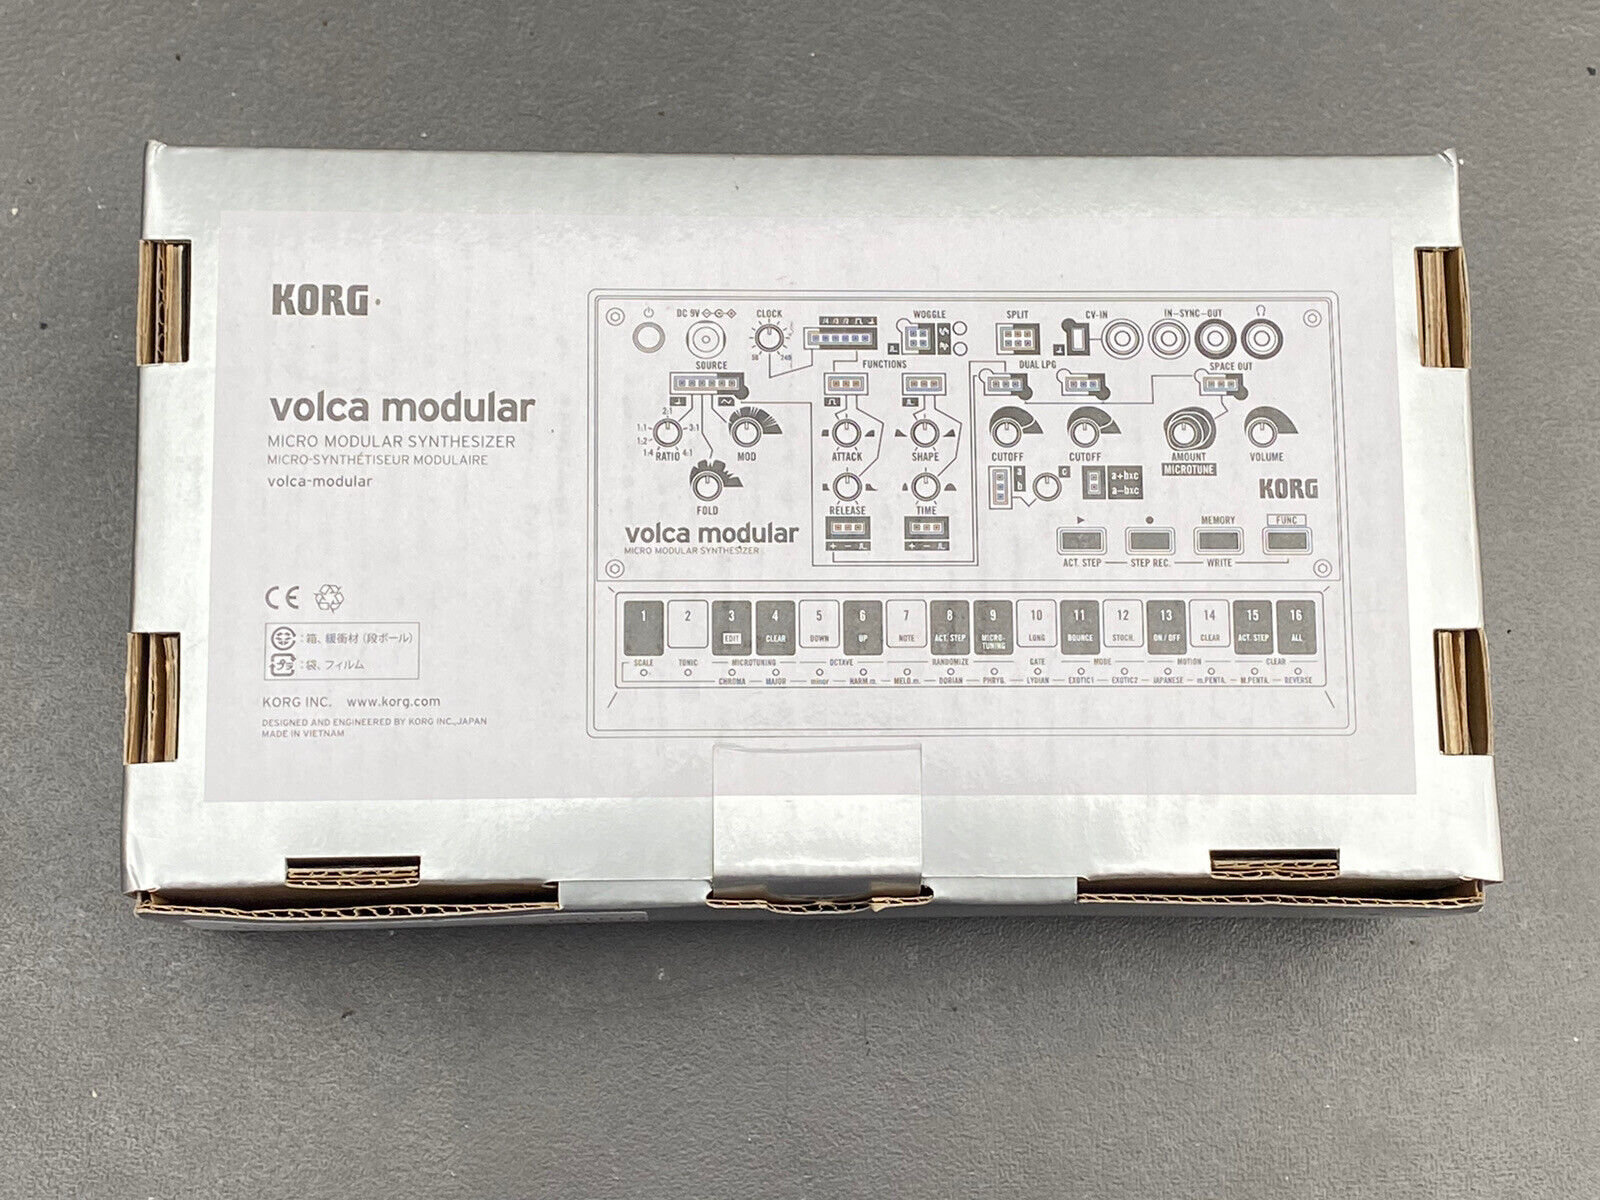 Korg+Volca+Modular+Analog+Synthesizer for sale online | eBay